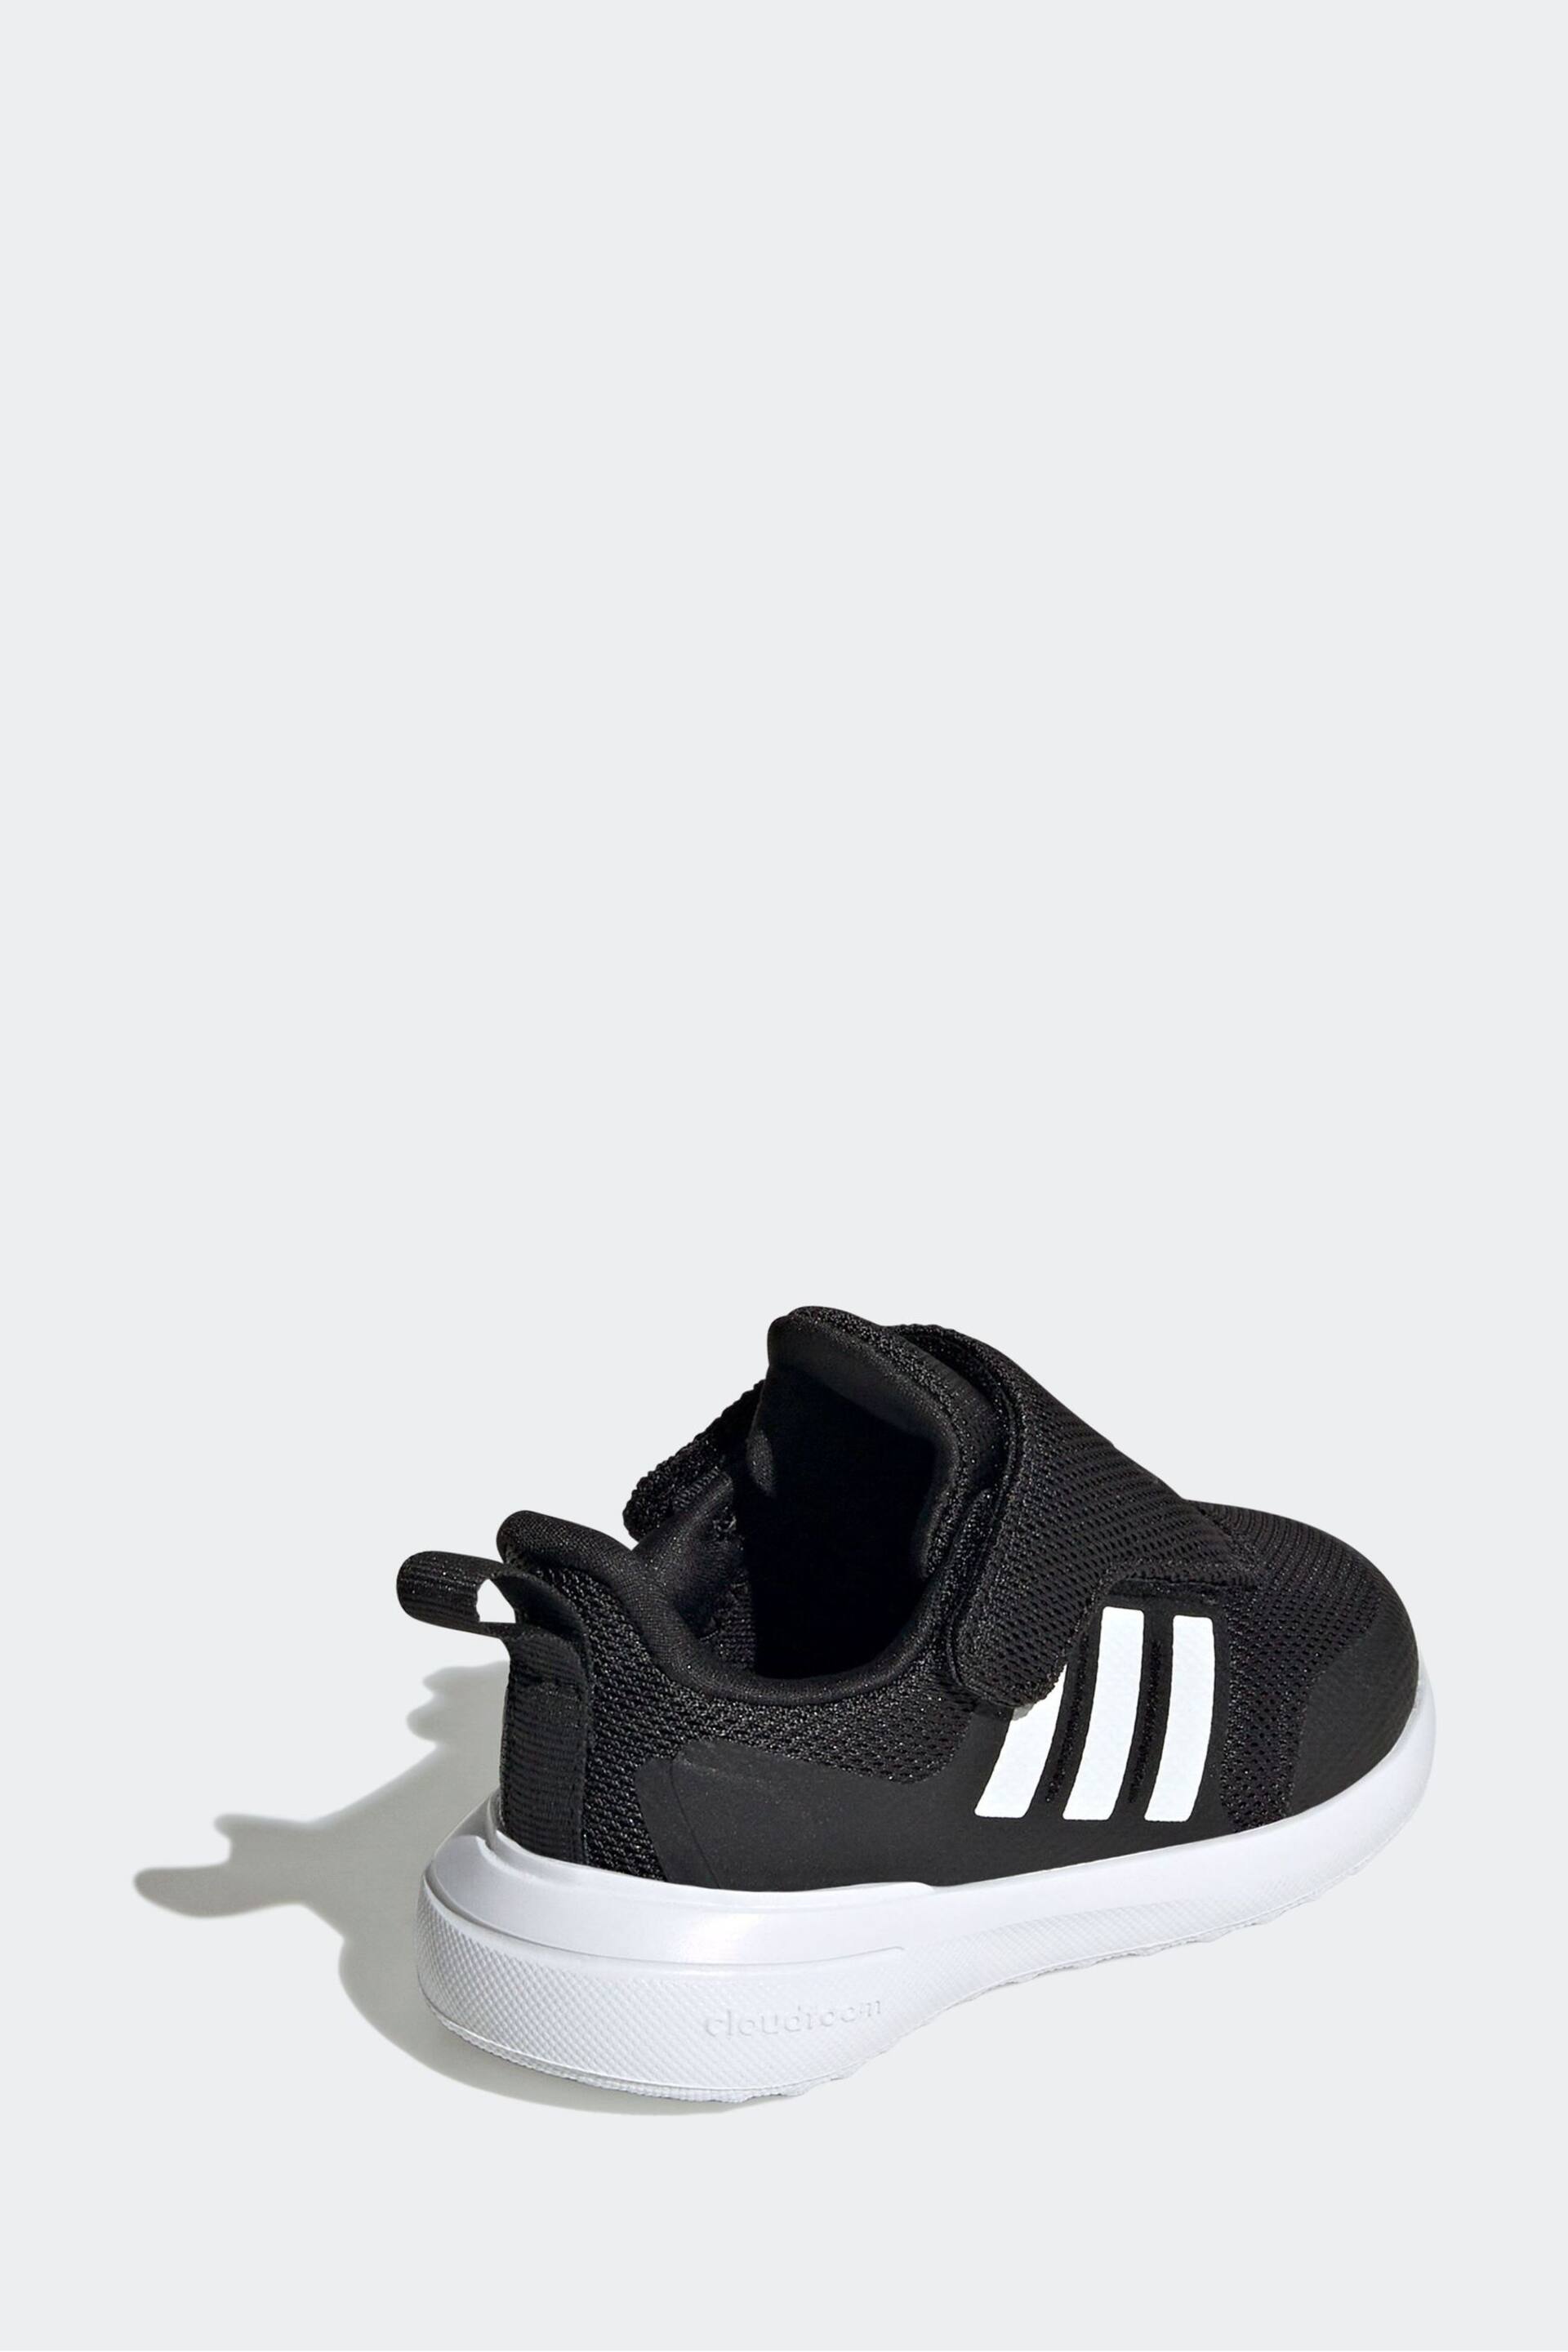 adidas Black/White Sportswear Fortarun 2.0 Trainers - Image 4 of 9